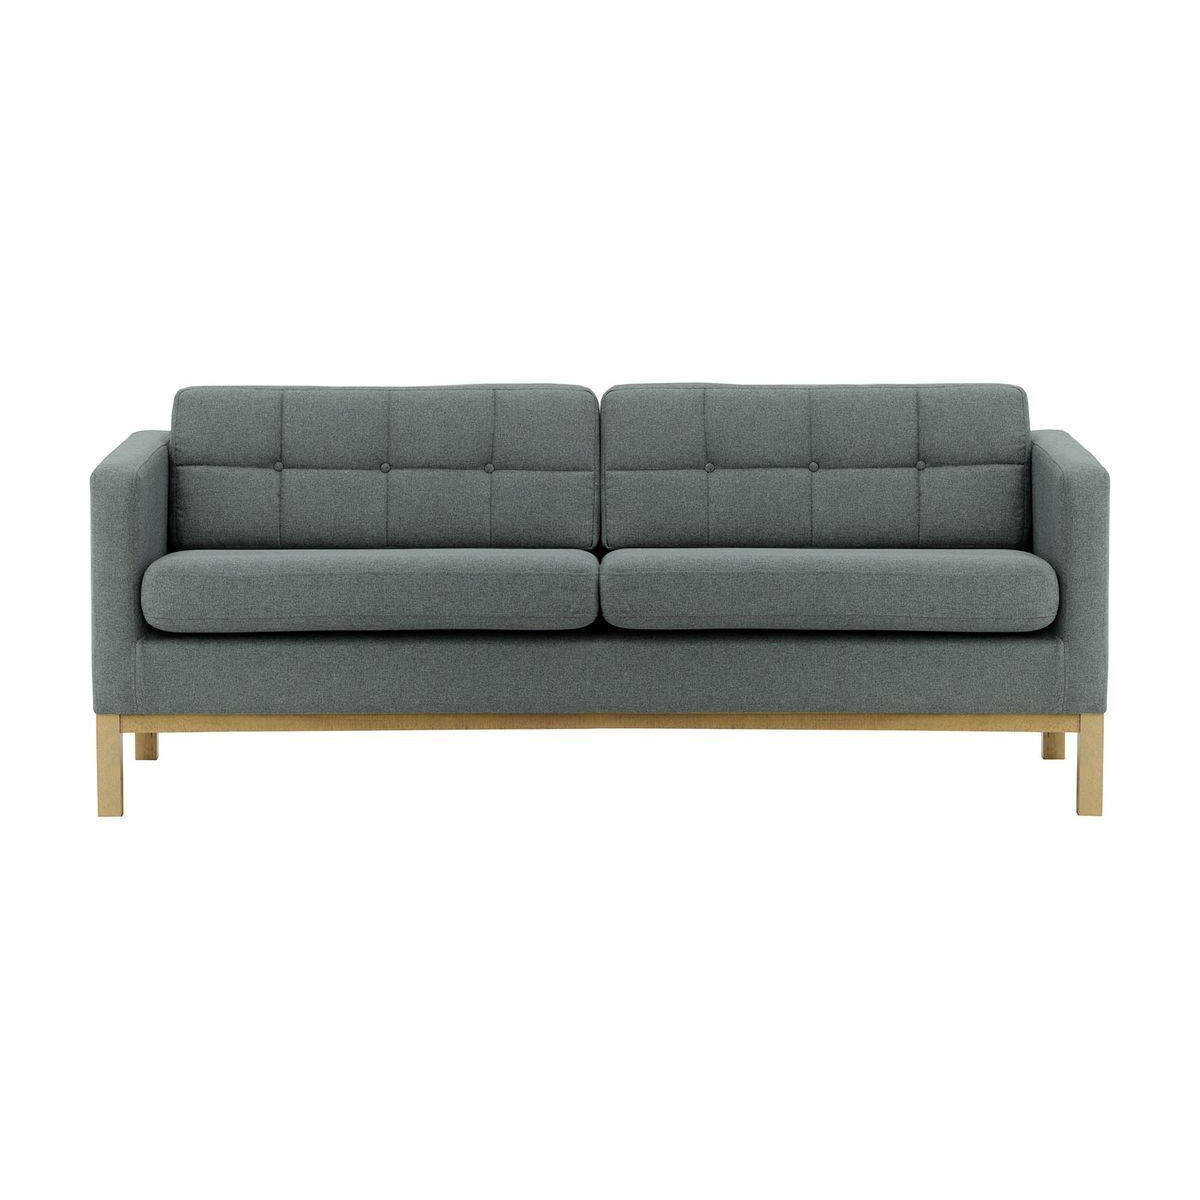 Normann 3 Seater Sofa, dark grey, Leg colour: wax black - image 1